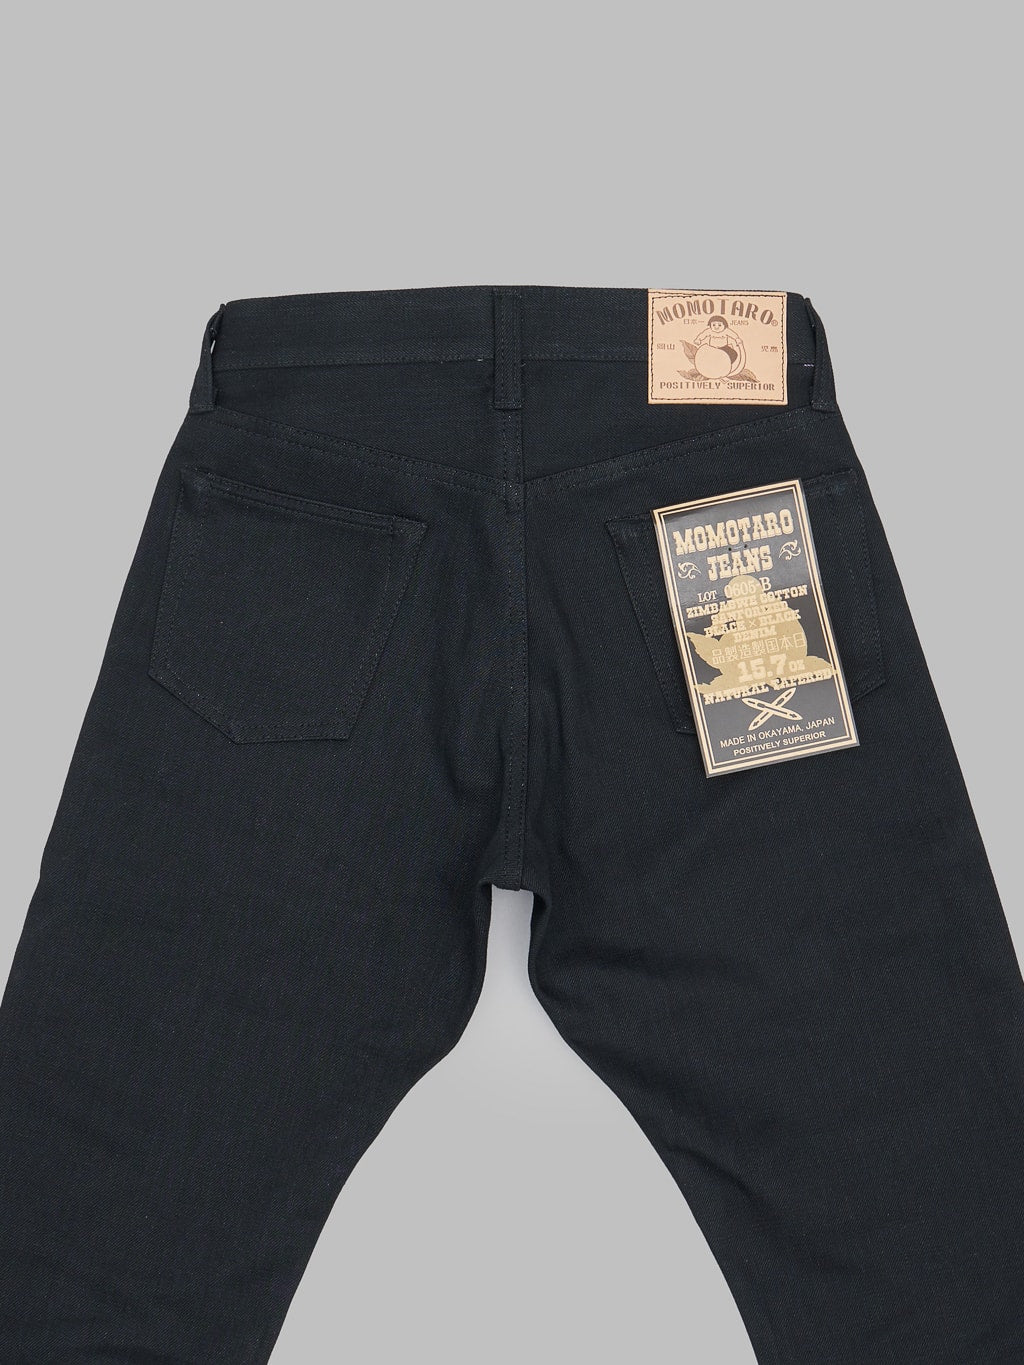 Momotaro 0605 B Black x Black Natural Tapered Jeans  back pockets